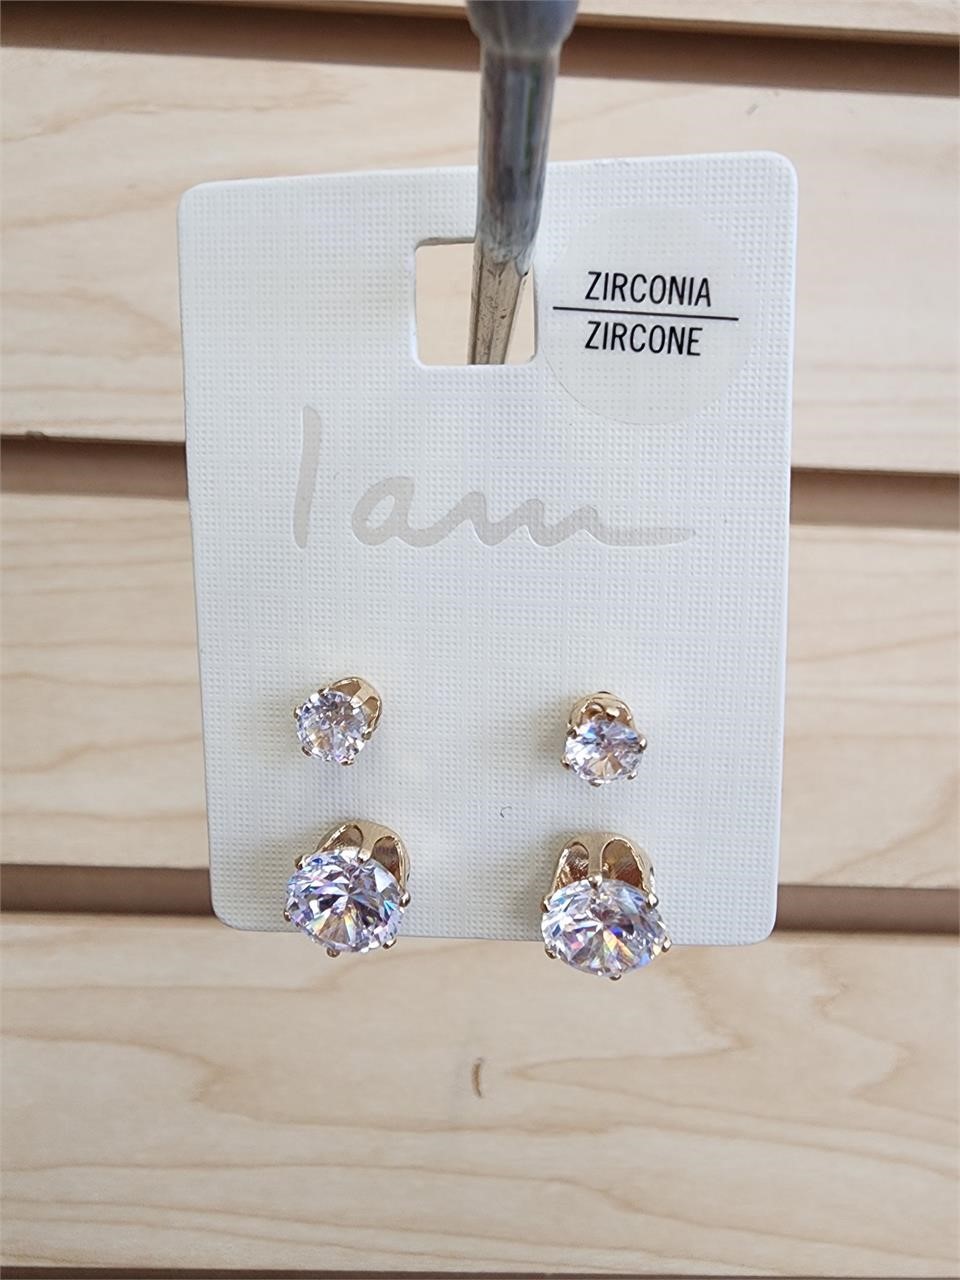 Zirconia stud earrings